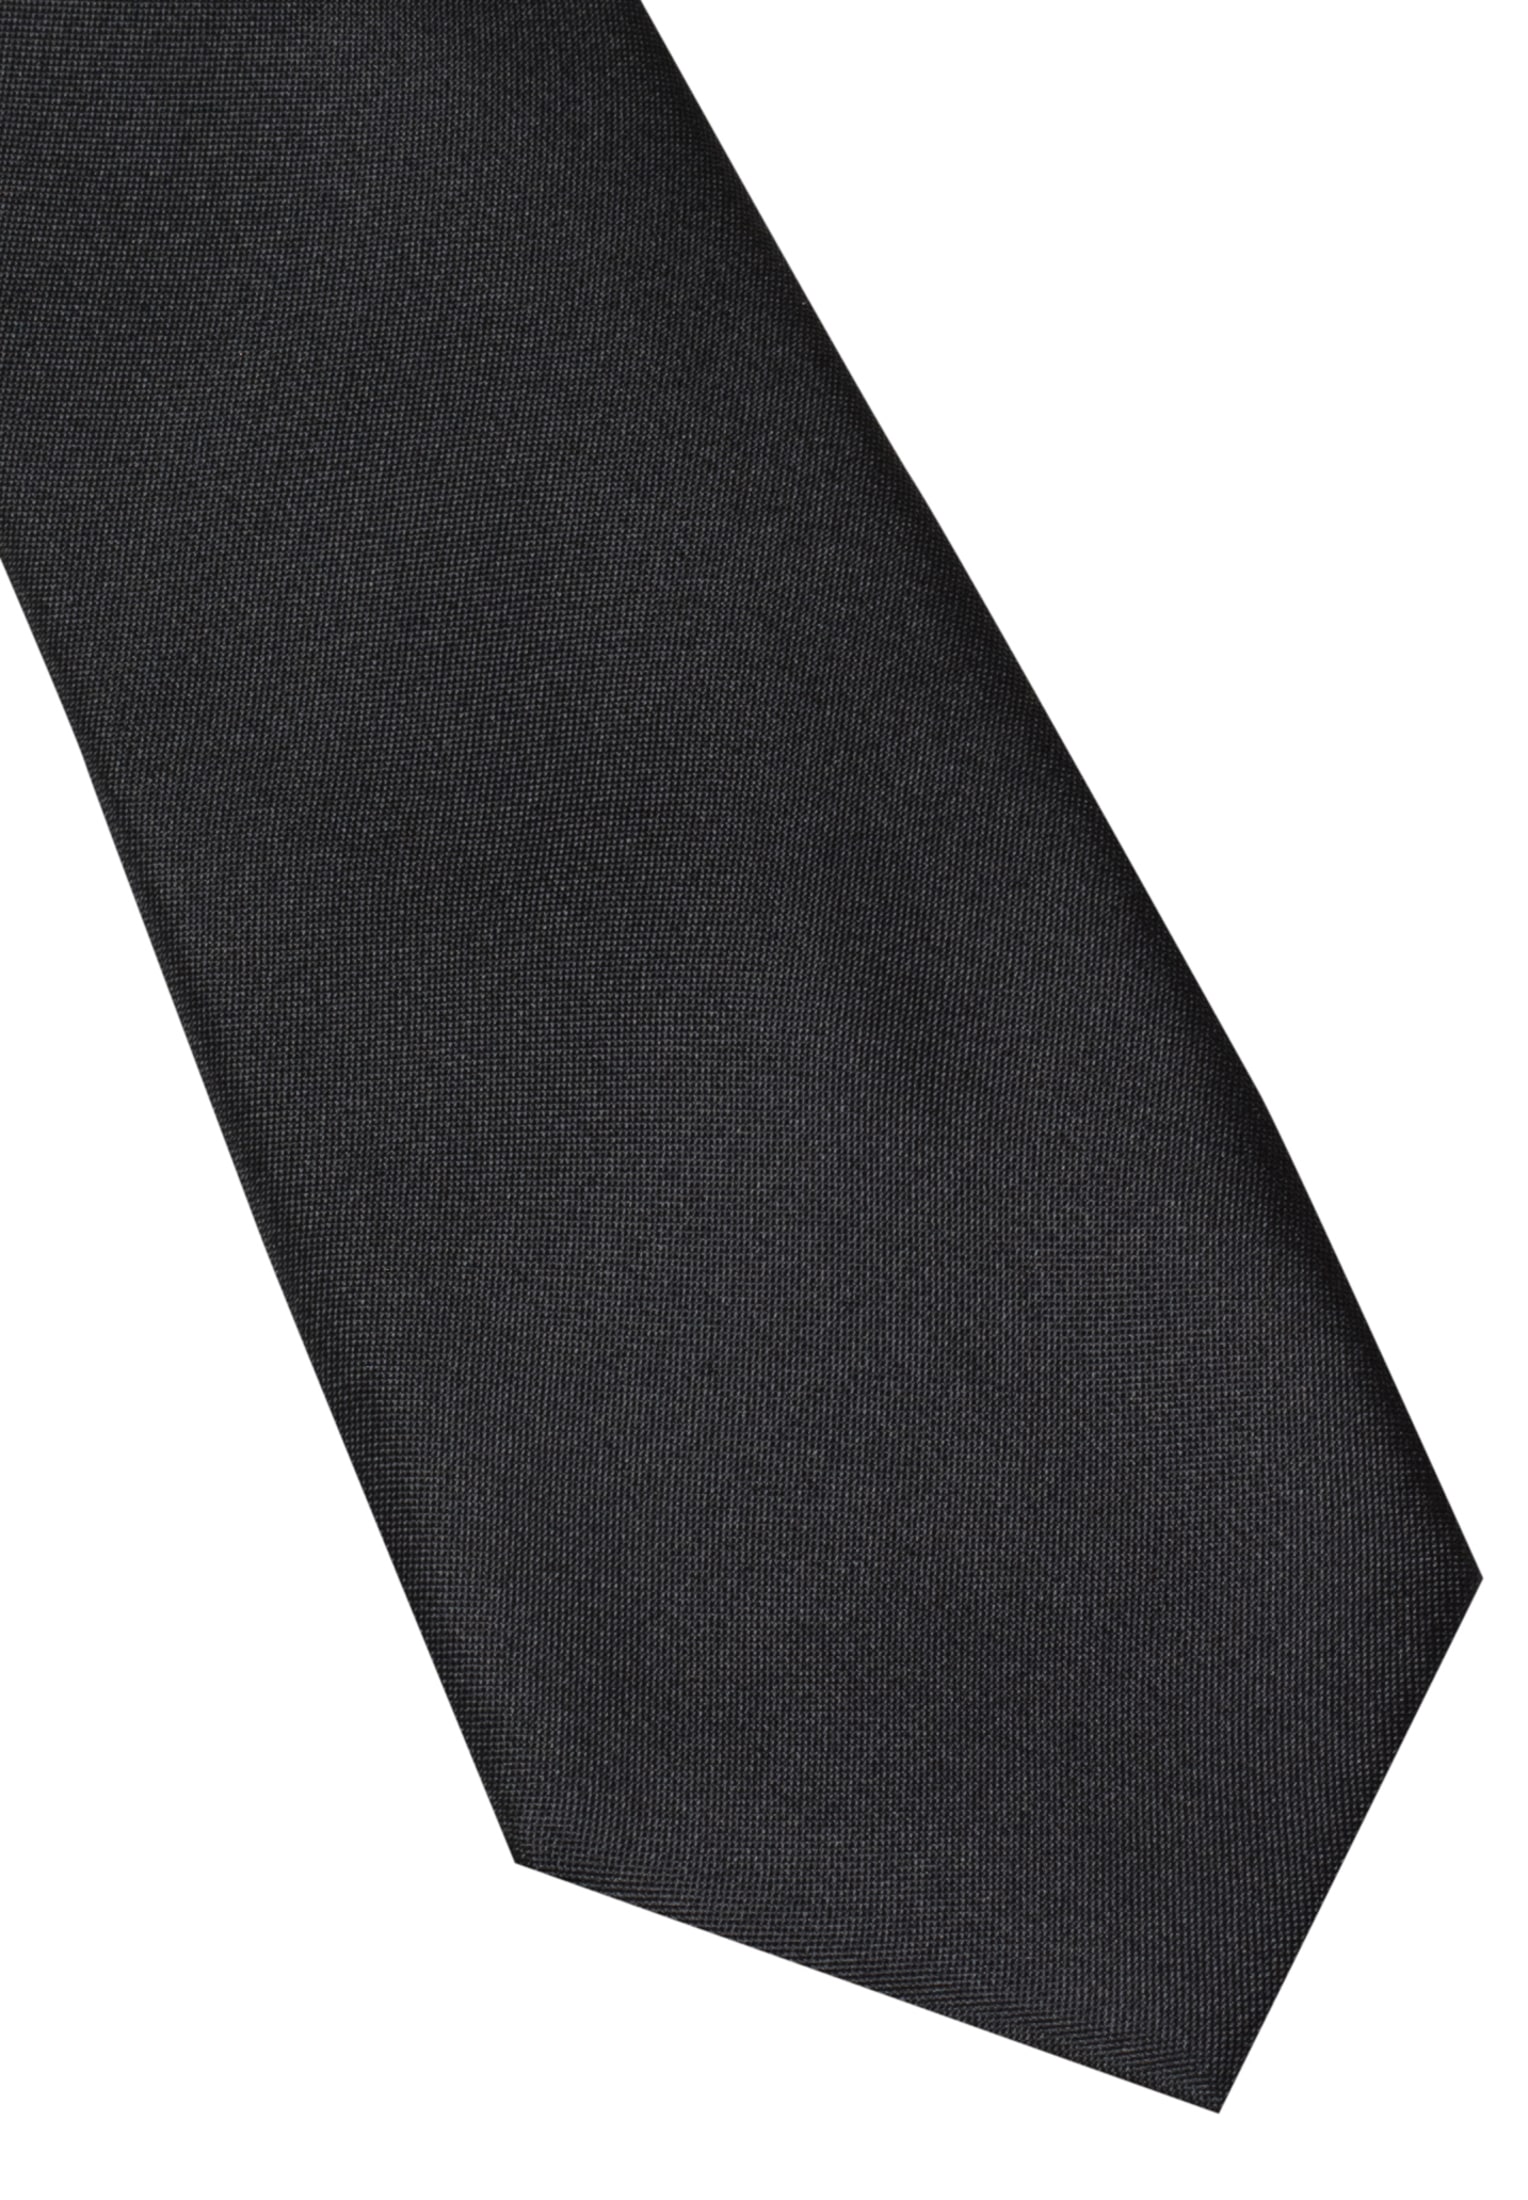 Krawatte silber silber | 142 in unifarben | 1AC00025-03-11-142 |